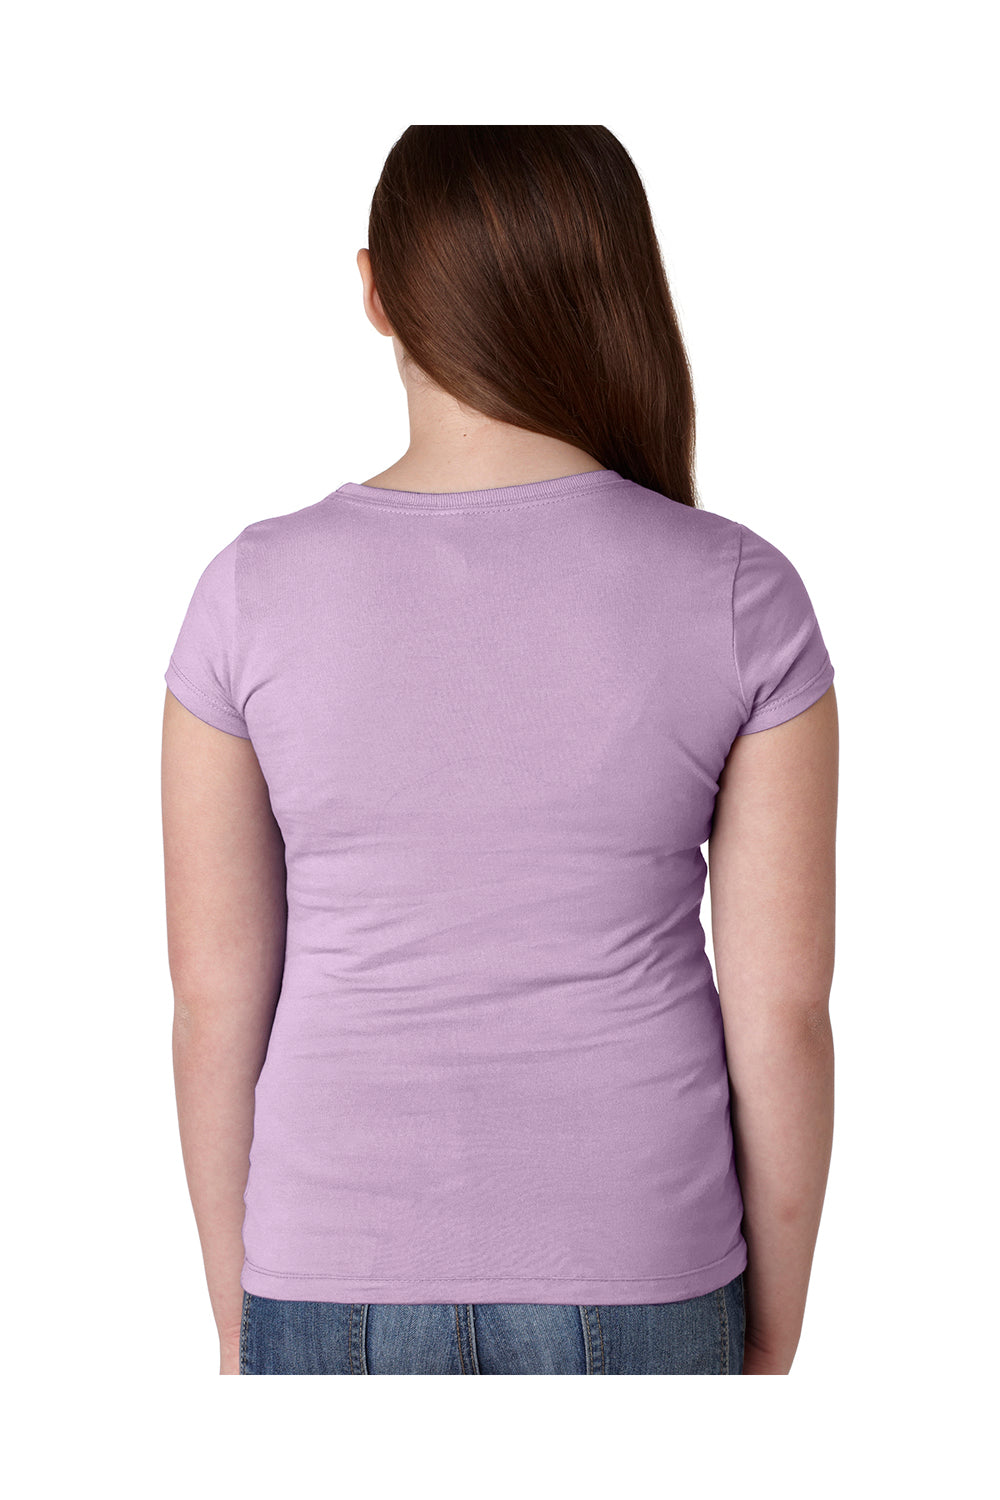 Next Level N3710 Youth Princess Fine Jersey Short Sleeve Crewneck T-Shirt Lilac Pink Back